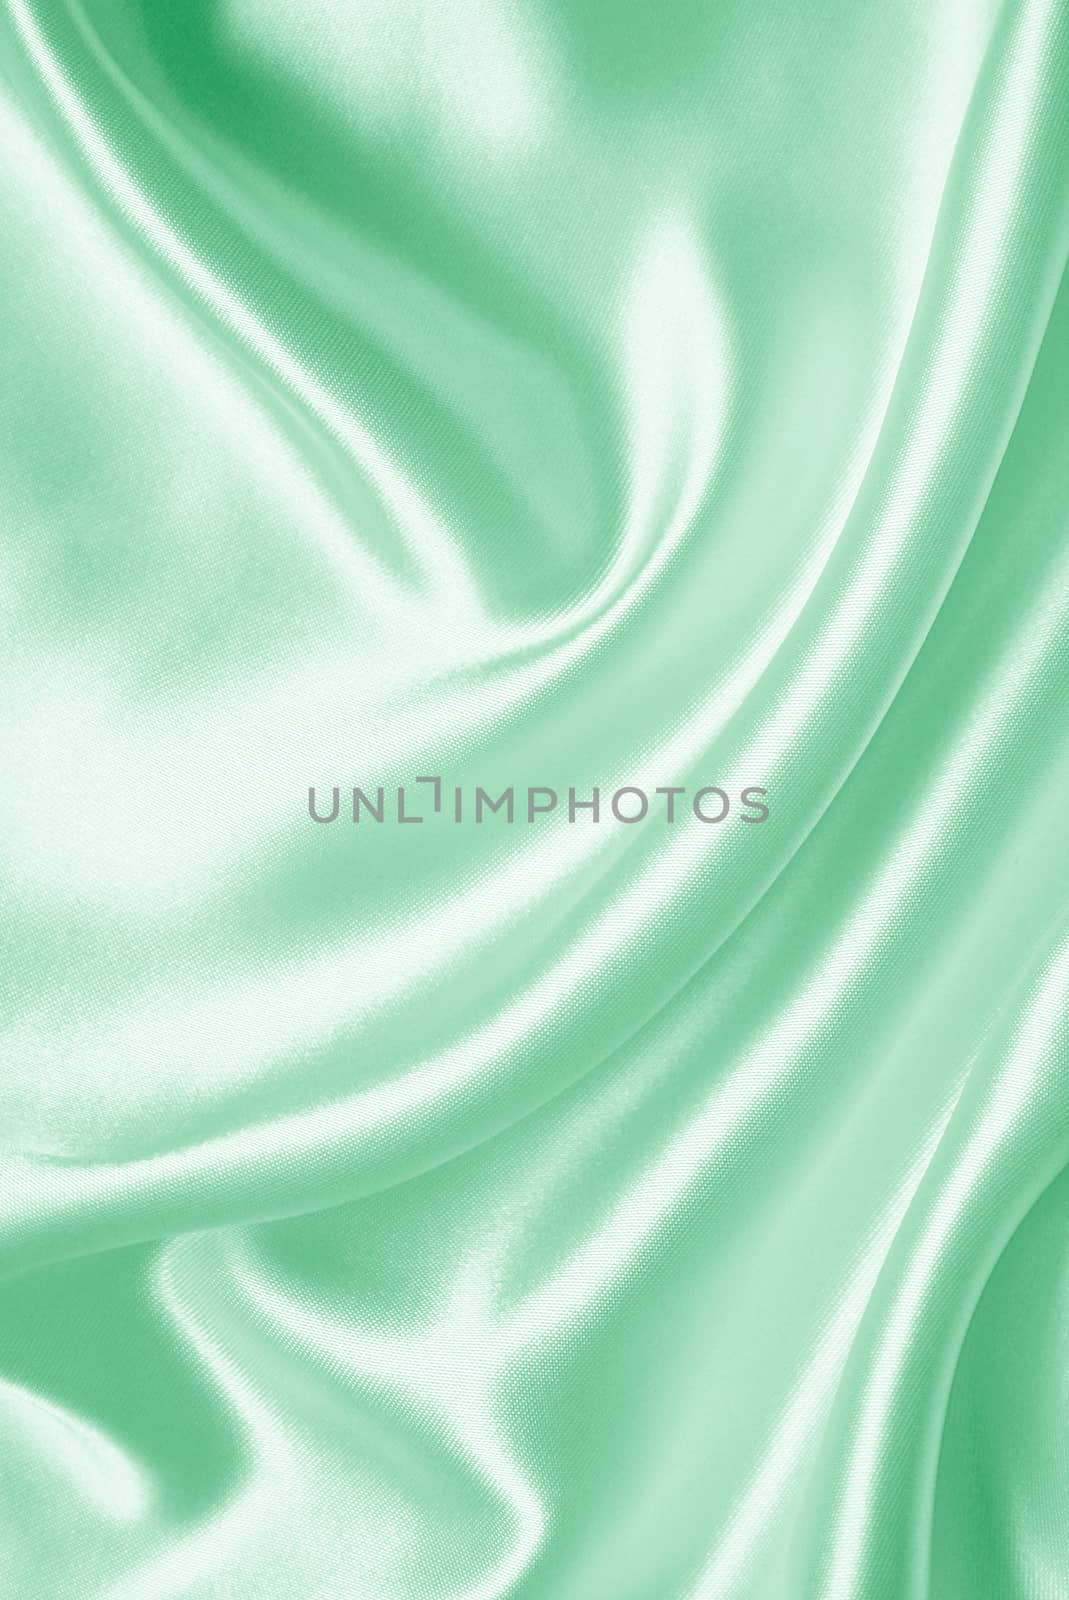 Smooth elegant green silk or satin texture as background 